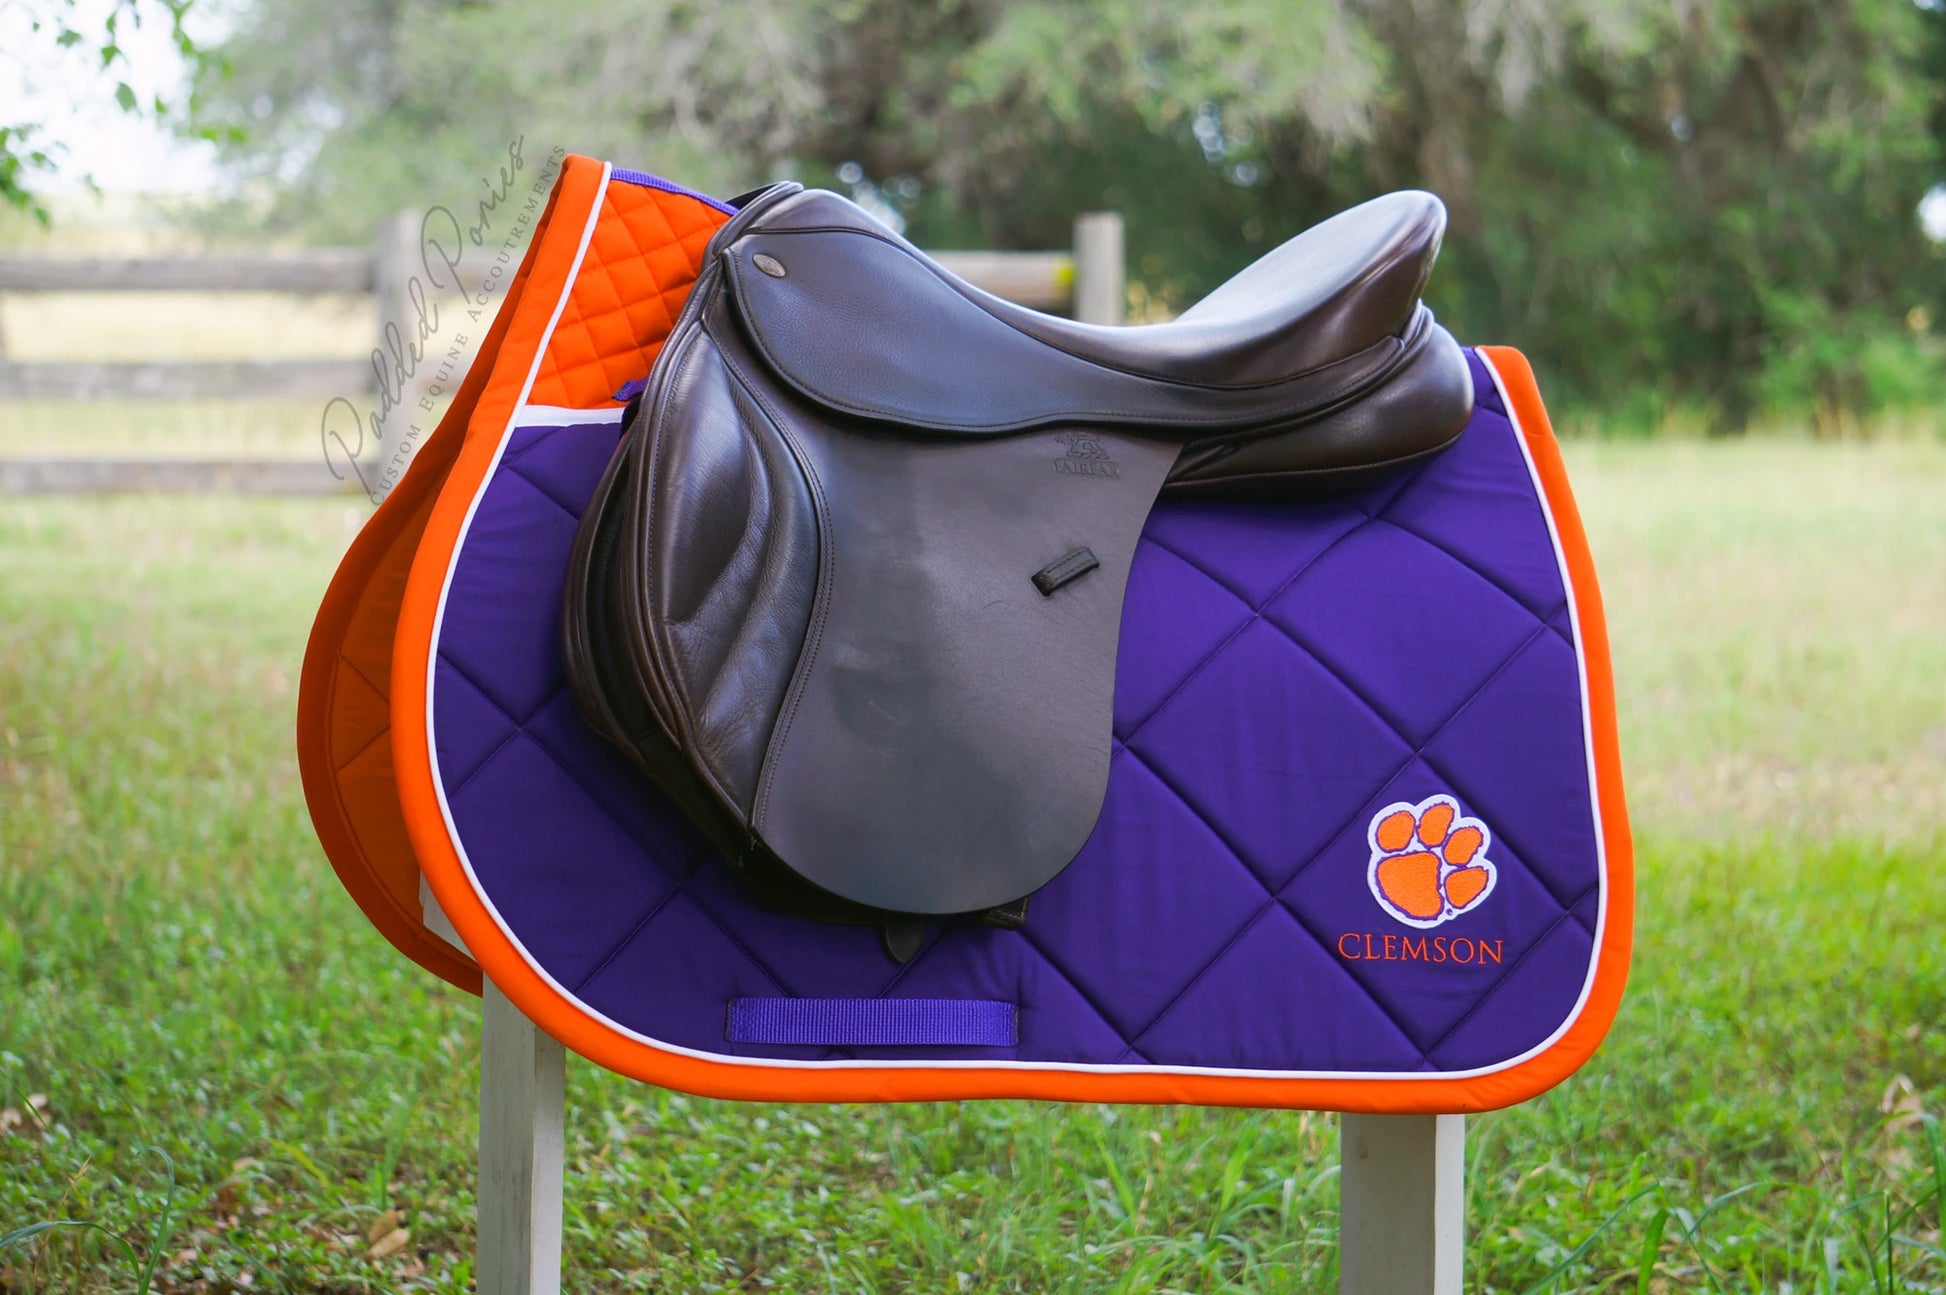 Clemson University South Carolina Patch All Purpose Saddle Pad in Purple and Orange